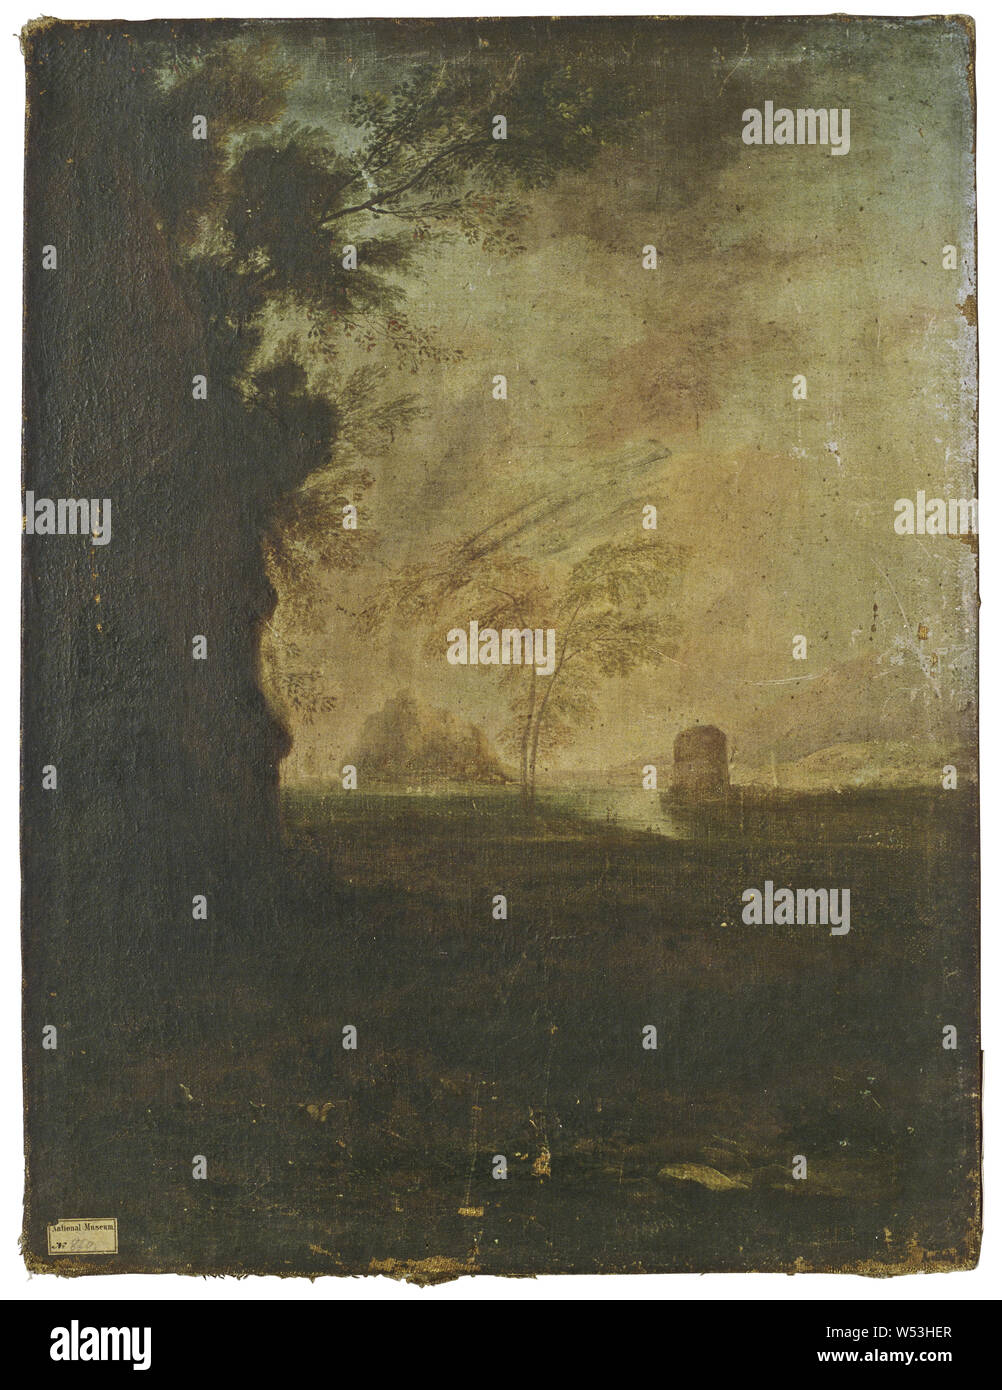 Landschaft, Öl auf Leinwand, Höhe 65 cm (25,5 Zoll), Breite 49,5 cm (19,4  Zoll Stockfotografie - Alamy